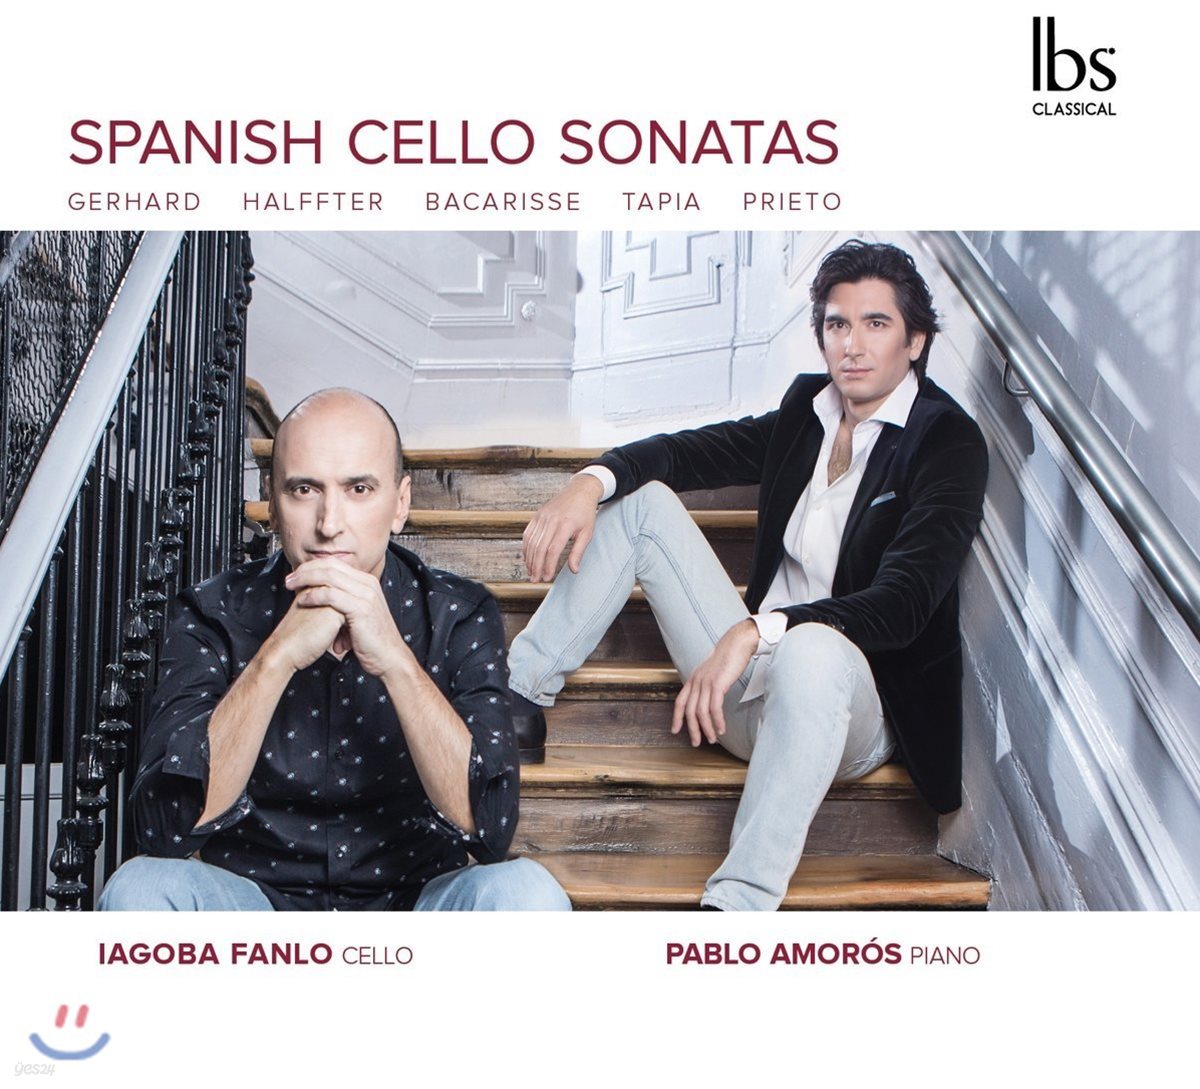 Iagoba Fanlo / Pablo Amoros 스페인의 첼로 소나타 - 이아고바 파늘로, 파블로 아모로스 (Spanish Cello Sonatas - Gerhard / Halffter / Bacarisse / Tapia / Prieto)